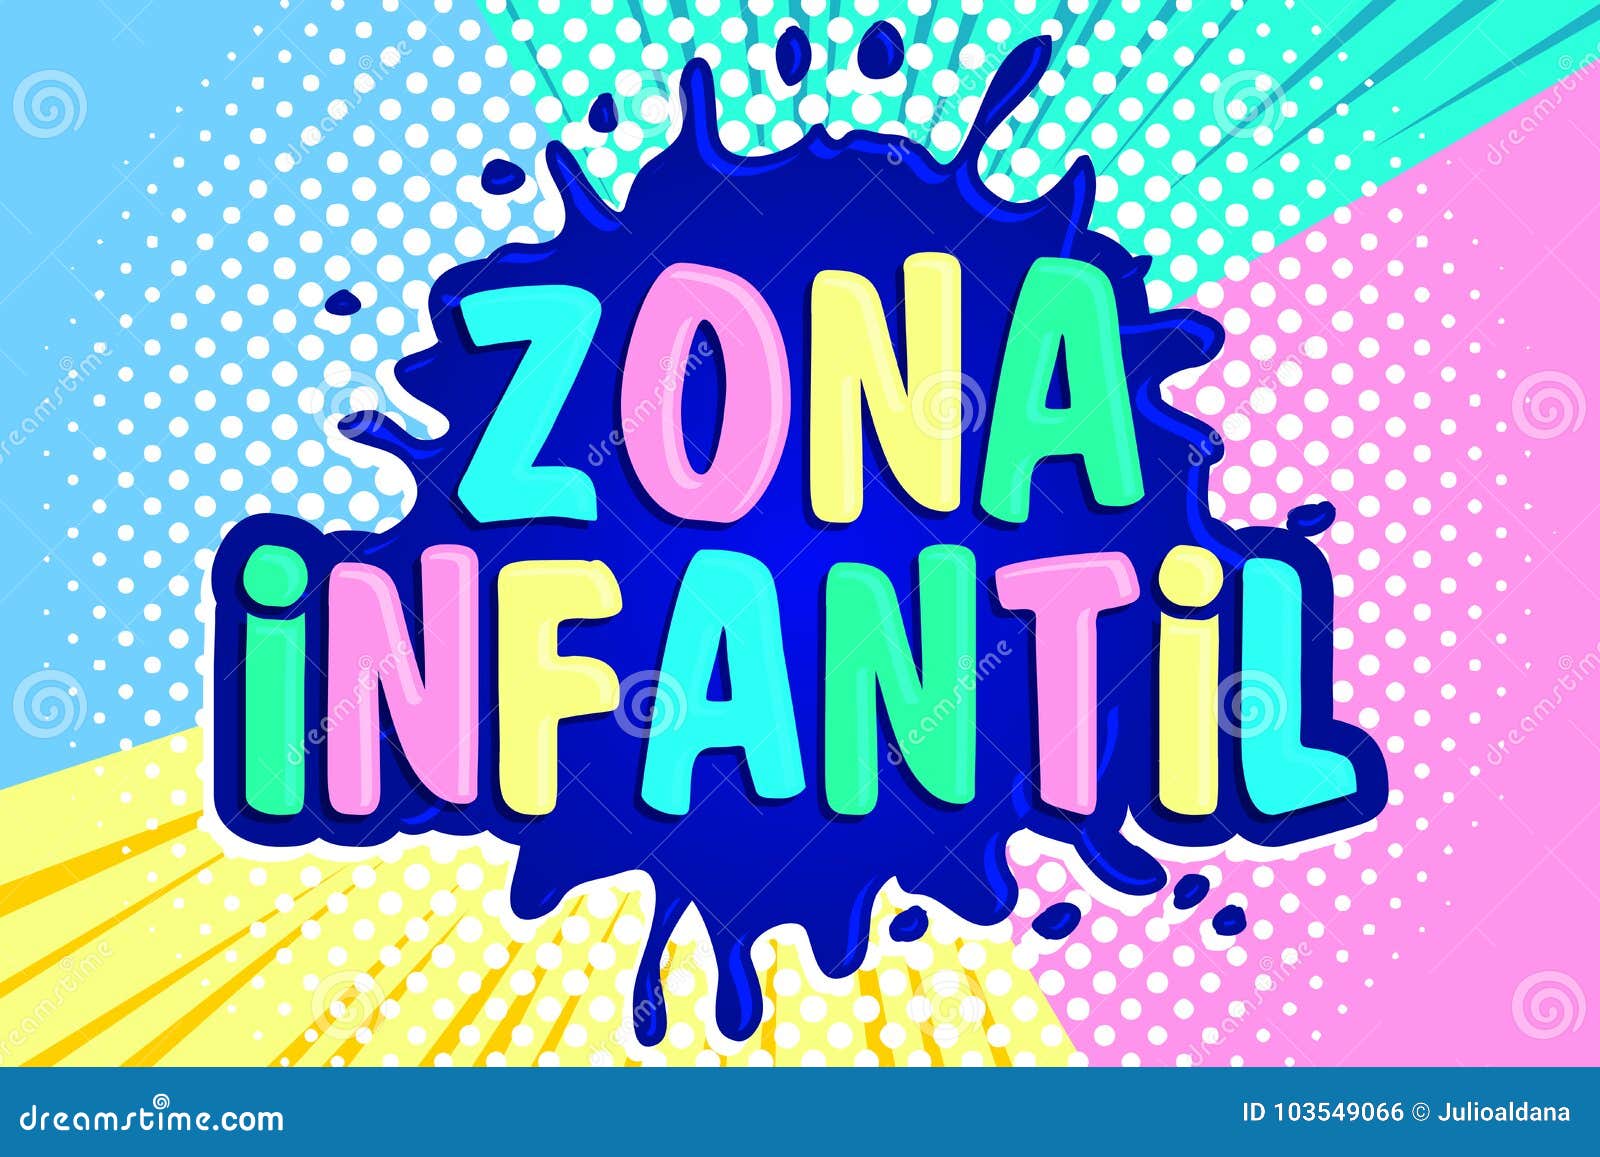 zona infantil, children zone spanish text